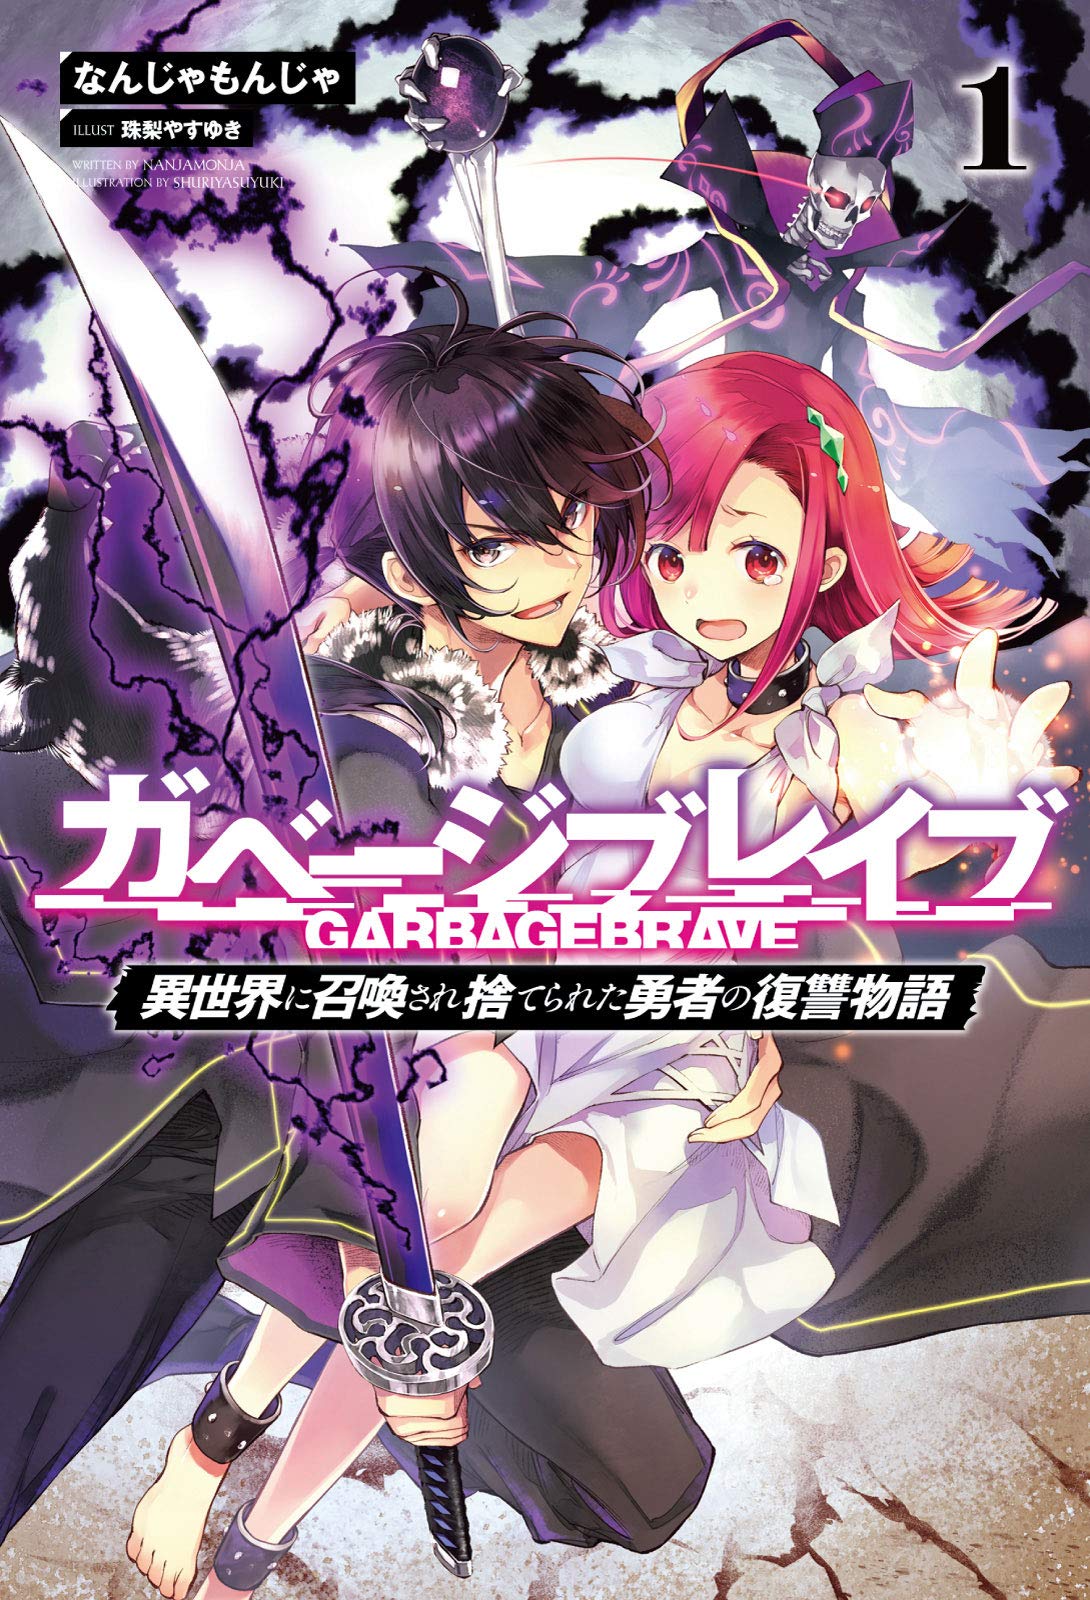 Read Manga Garbage Hero: A Revenge Story Of A Hero Who Got Summoned To ...